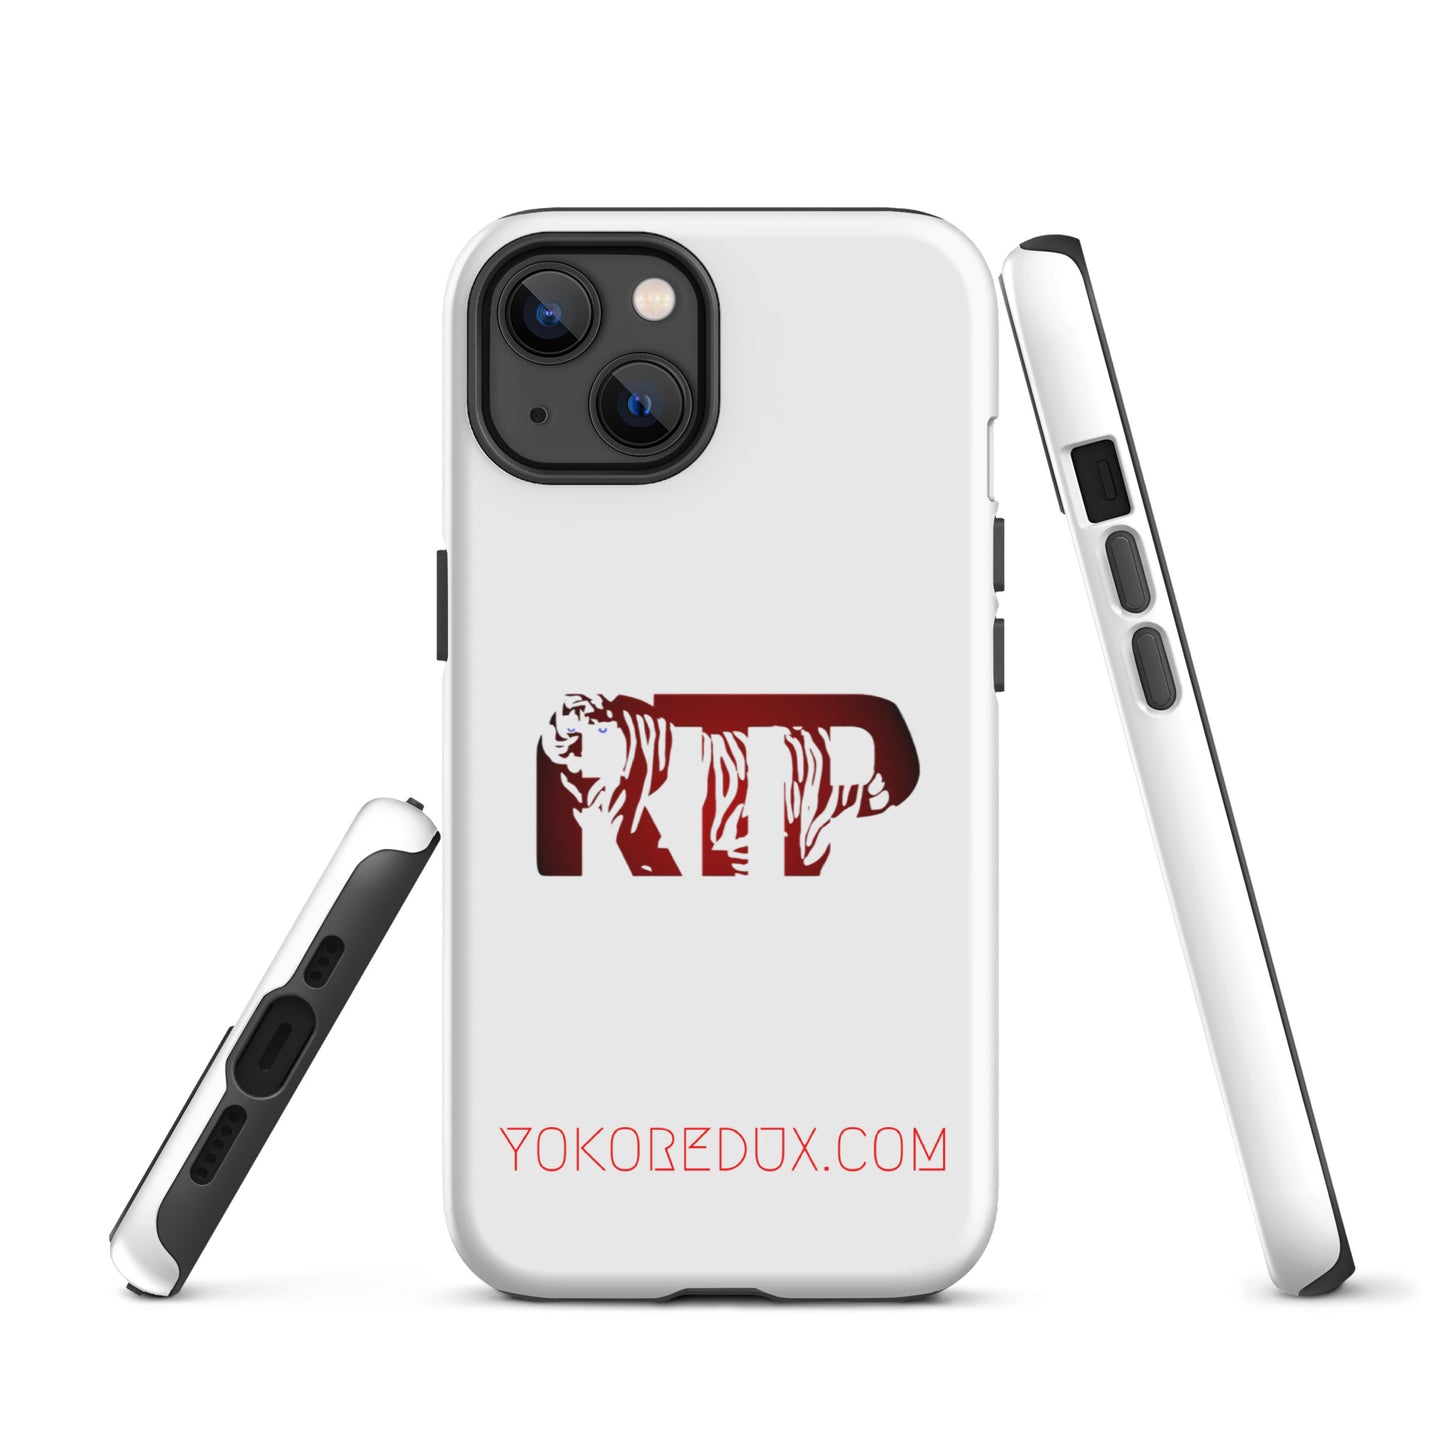 Yoko_Redux_4_Tough Case for iPhone®